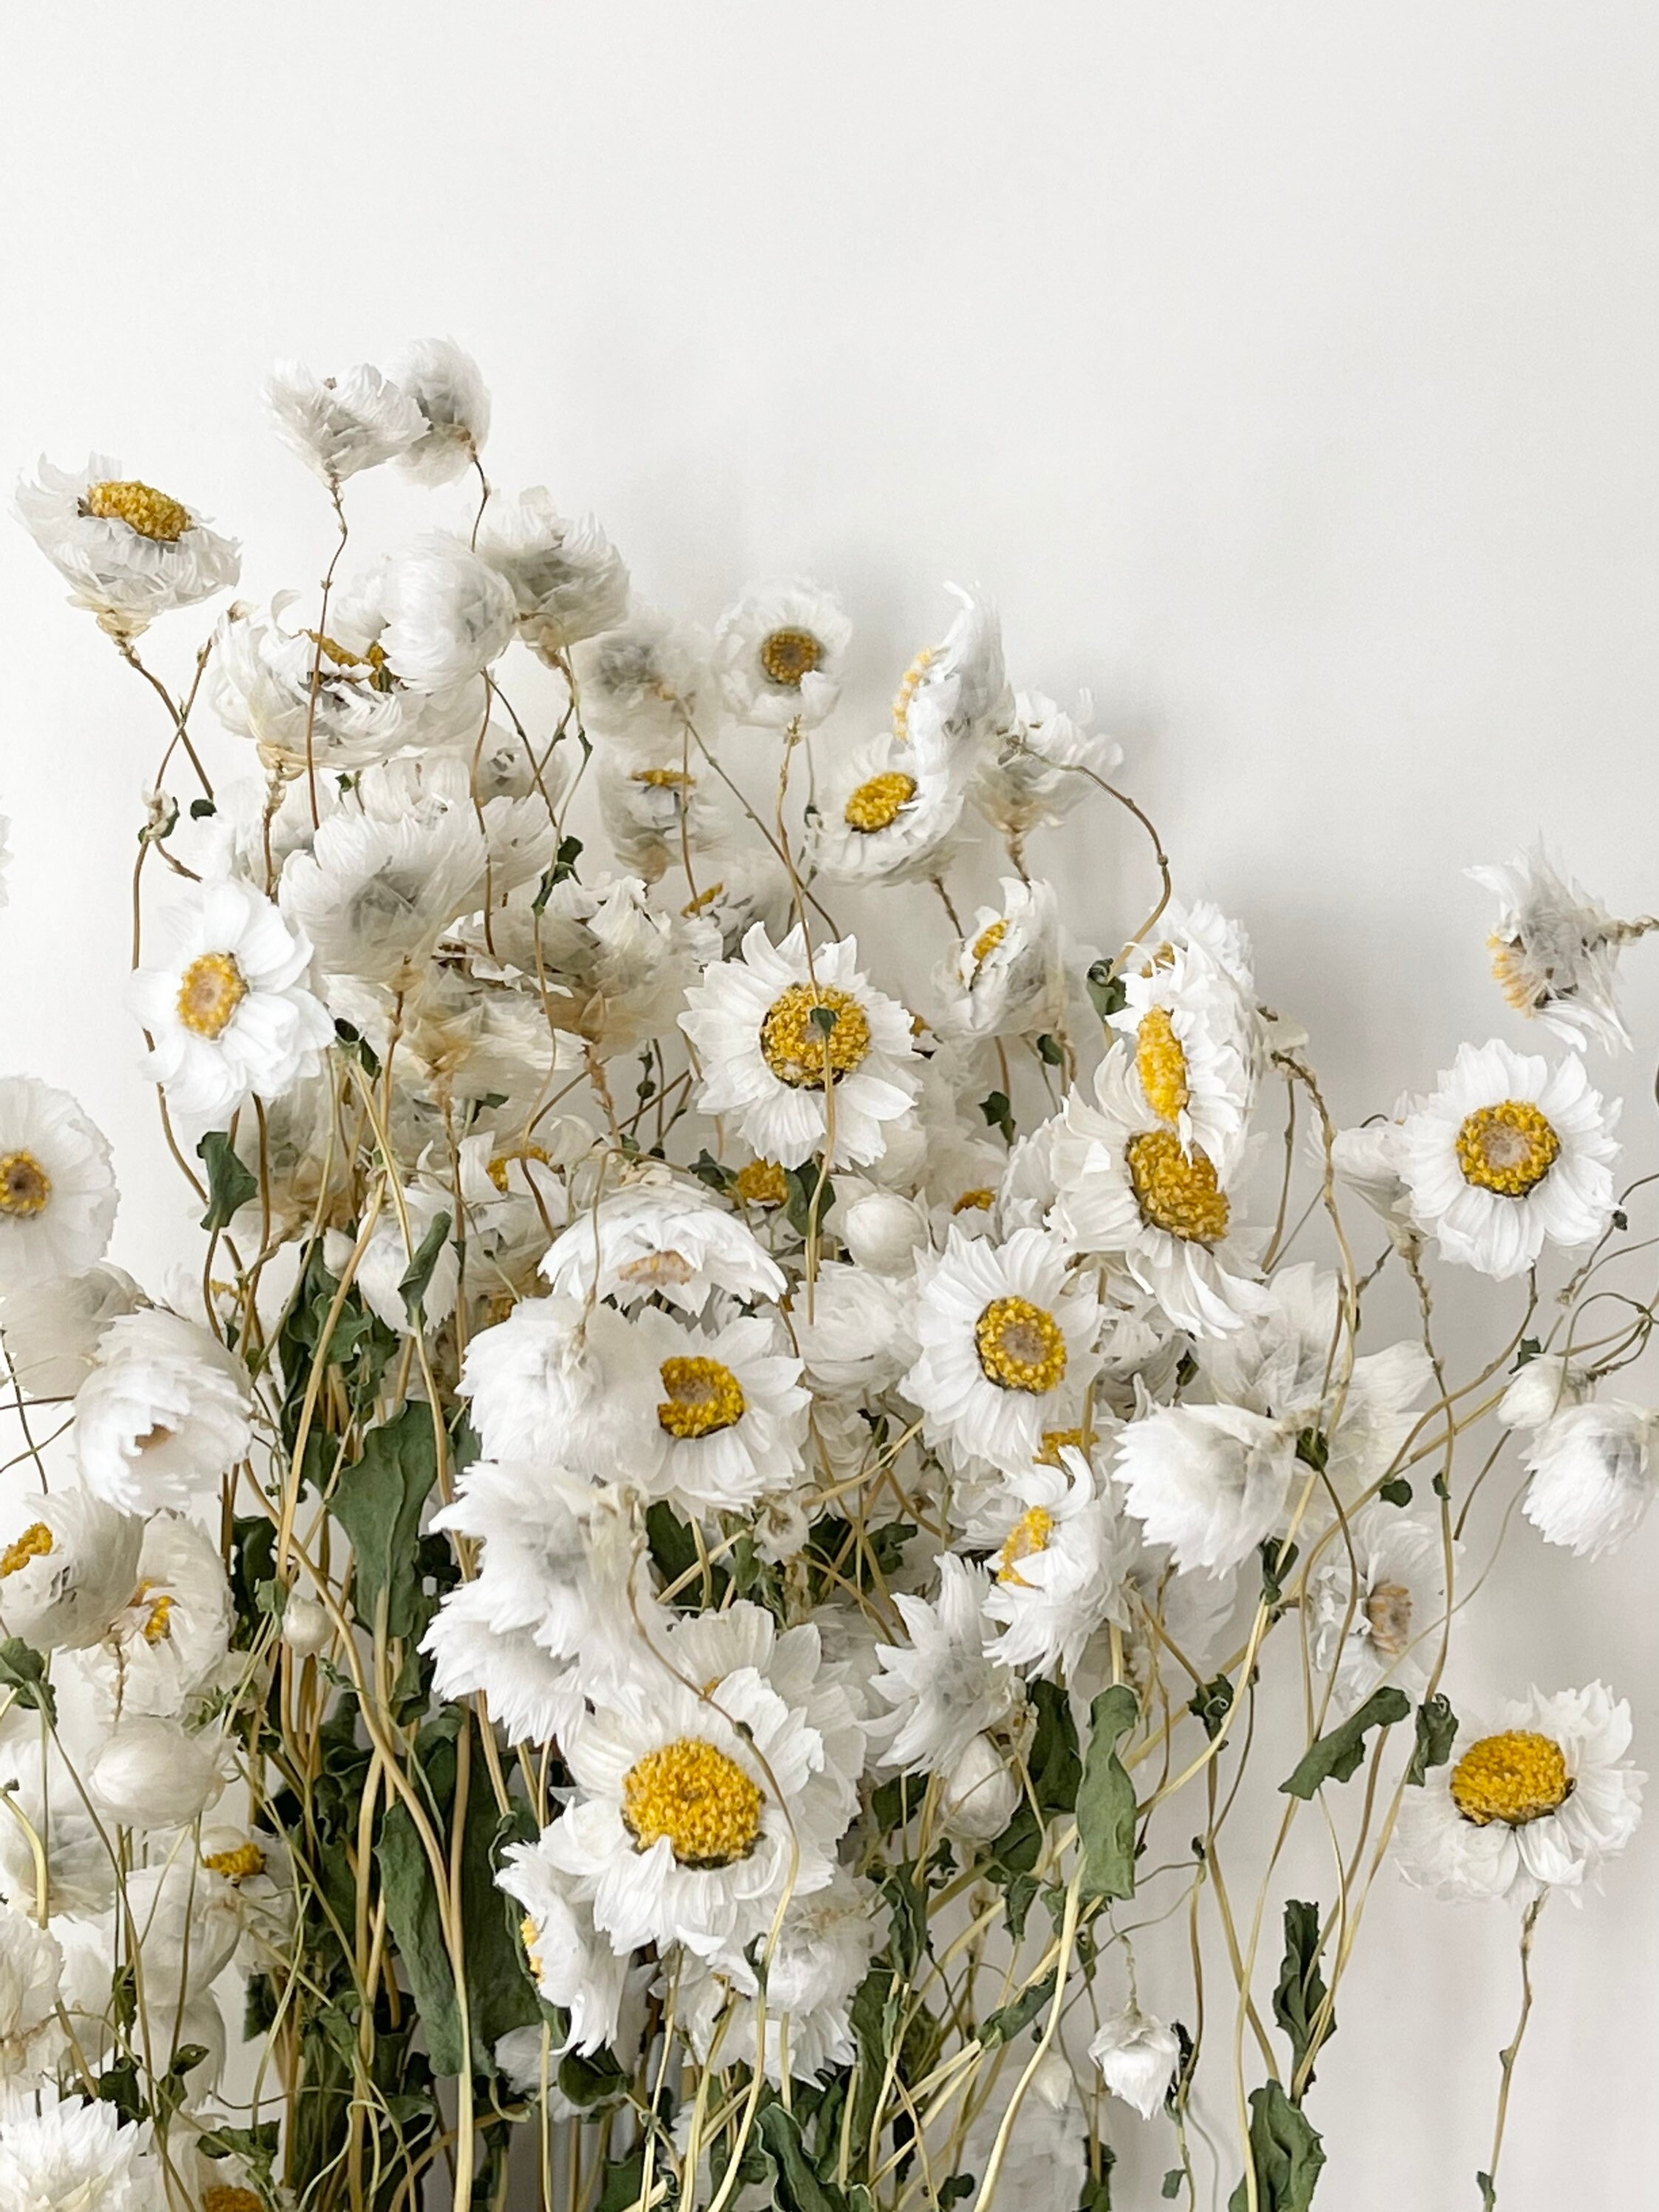 Dried Daisy White Flowers,250+ Real Chrysanthemum Rhodanthe